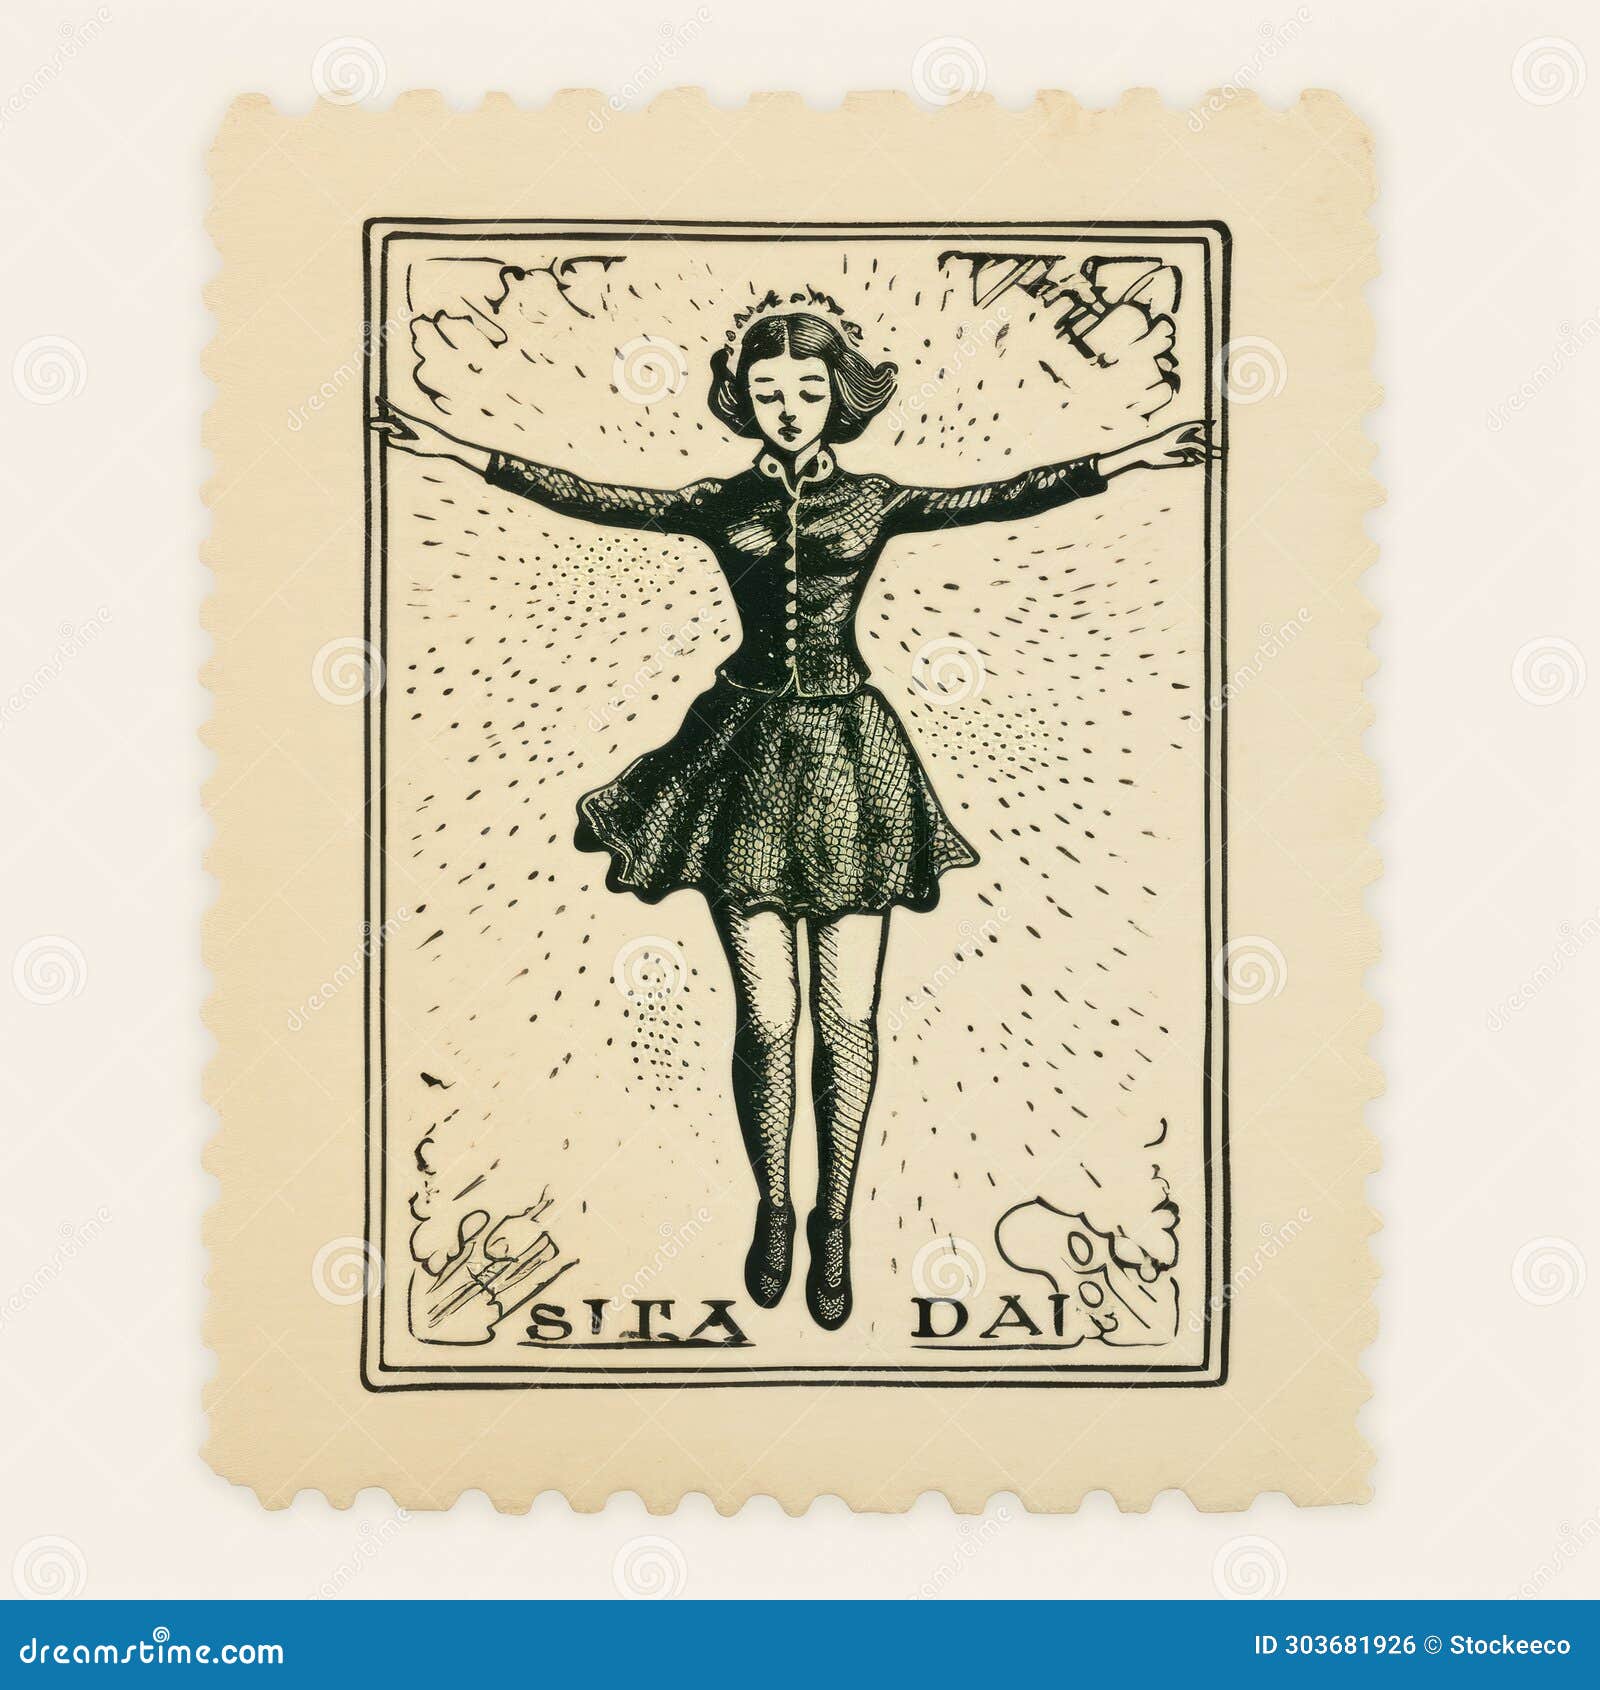 Uk Dancer Stamp: Vintage Style Illustration Inspired by Dada Stock